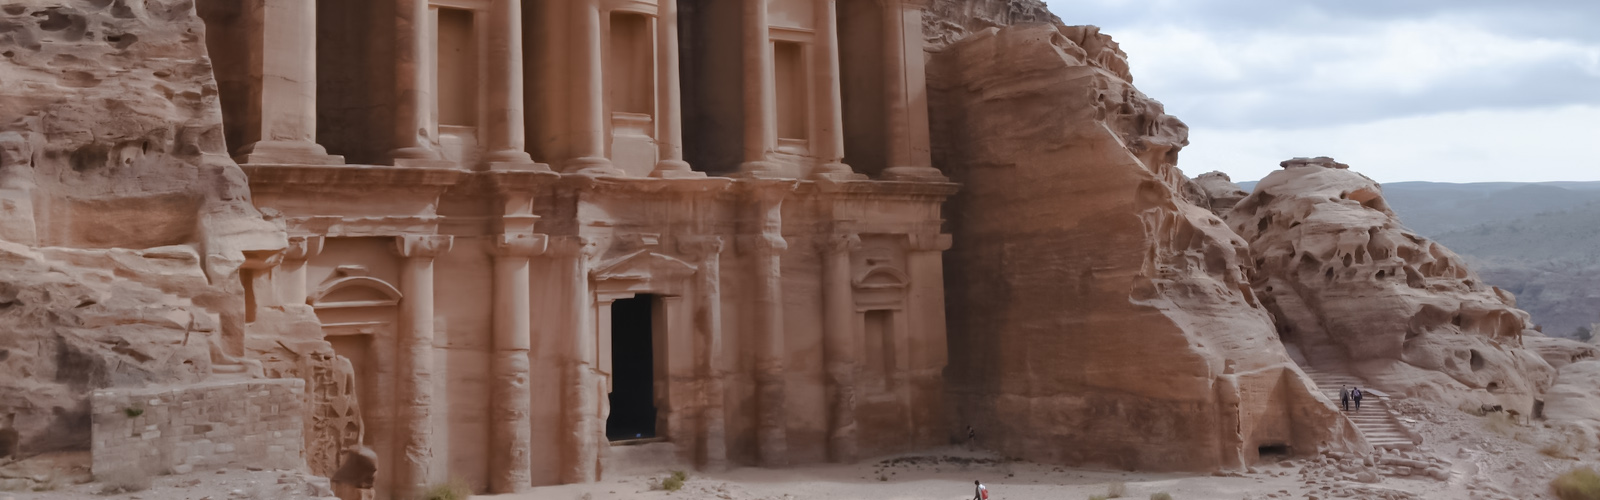 Petra Travel Guide,Wadi Rum,Dana Biosphere Reserve,Little Petra,Shobak Castle,Tomb of Aaron